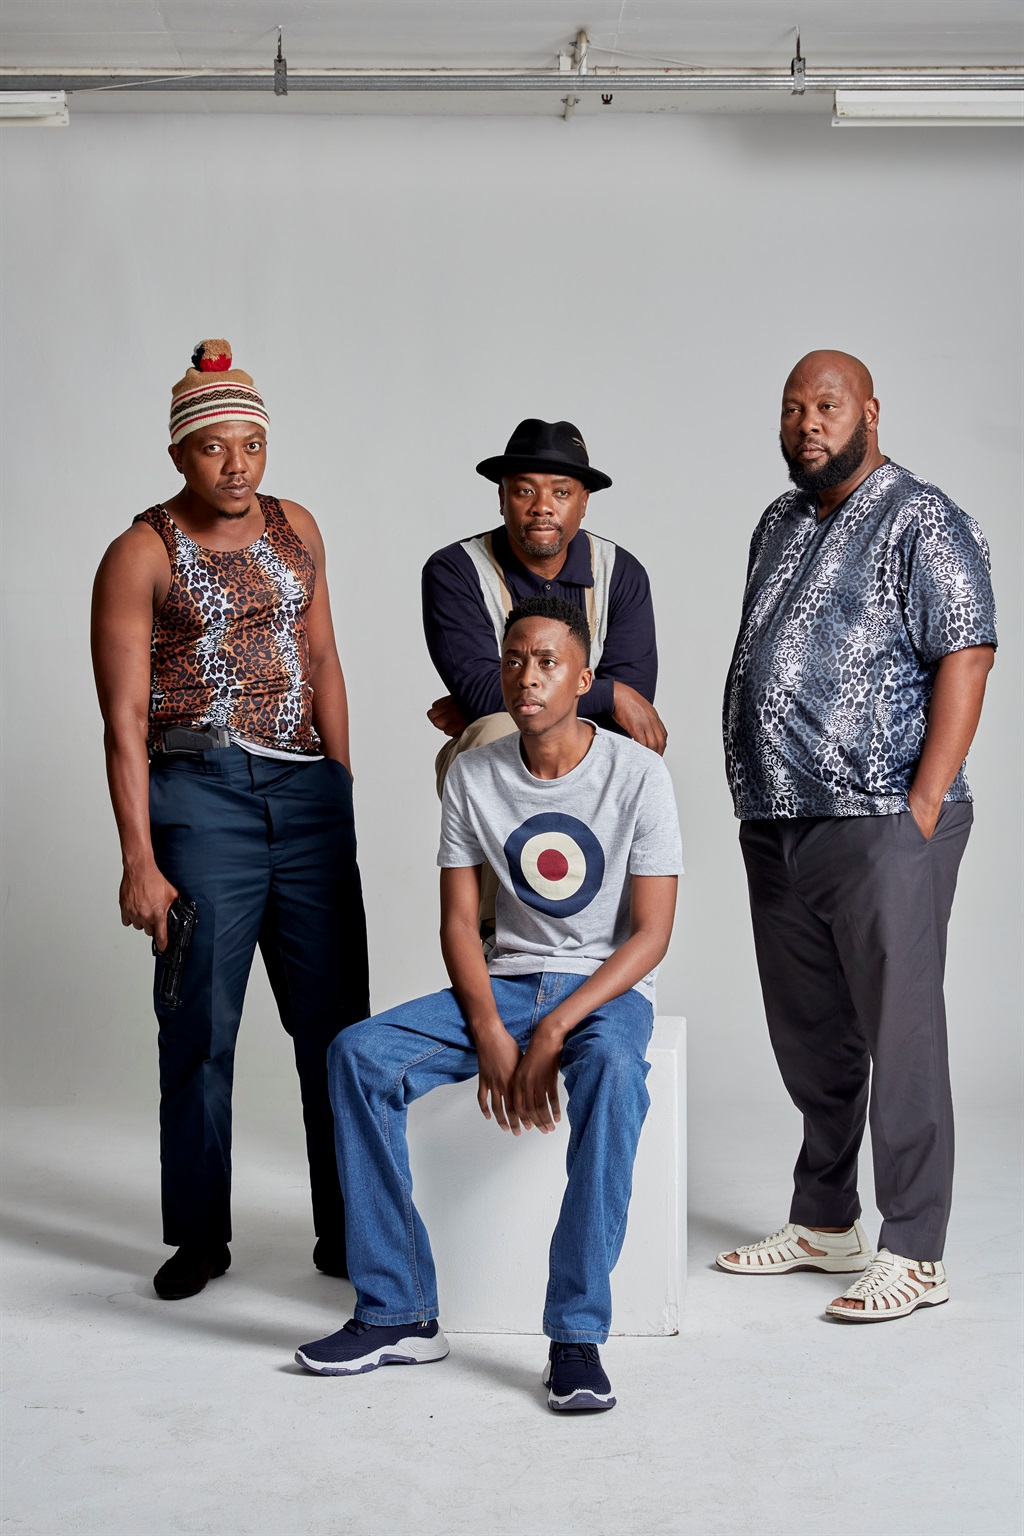 eHostela's new cast, S'motoza Ngwadi, Cijimpi and Ntokozo (seated).